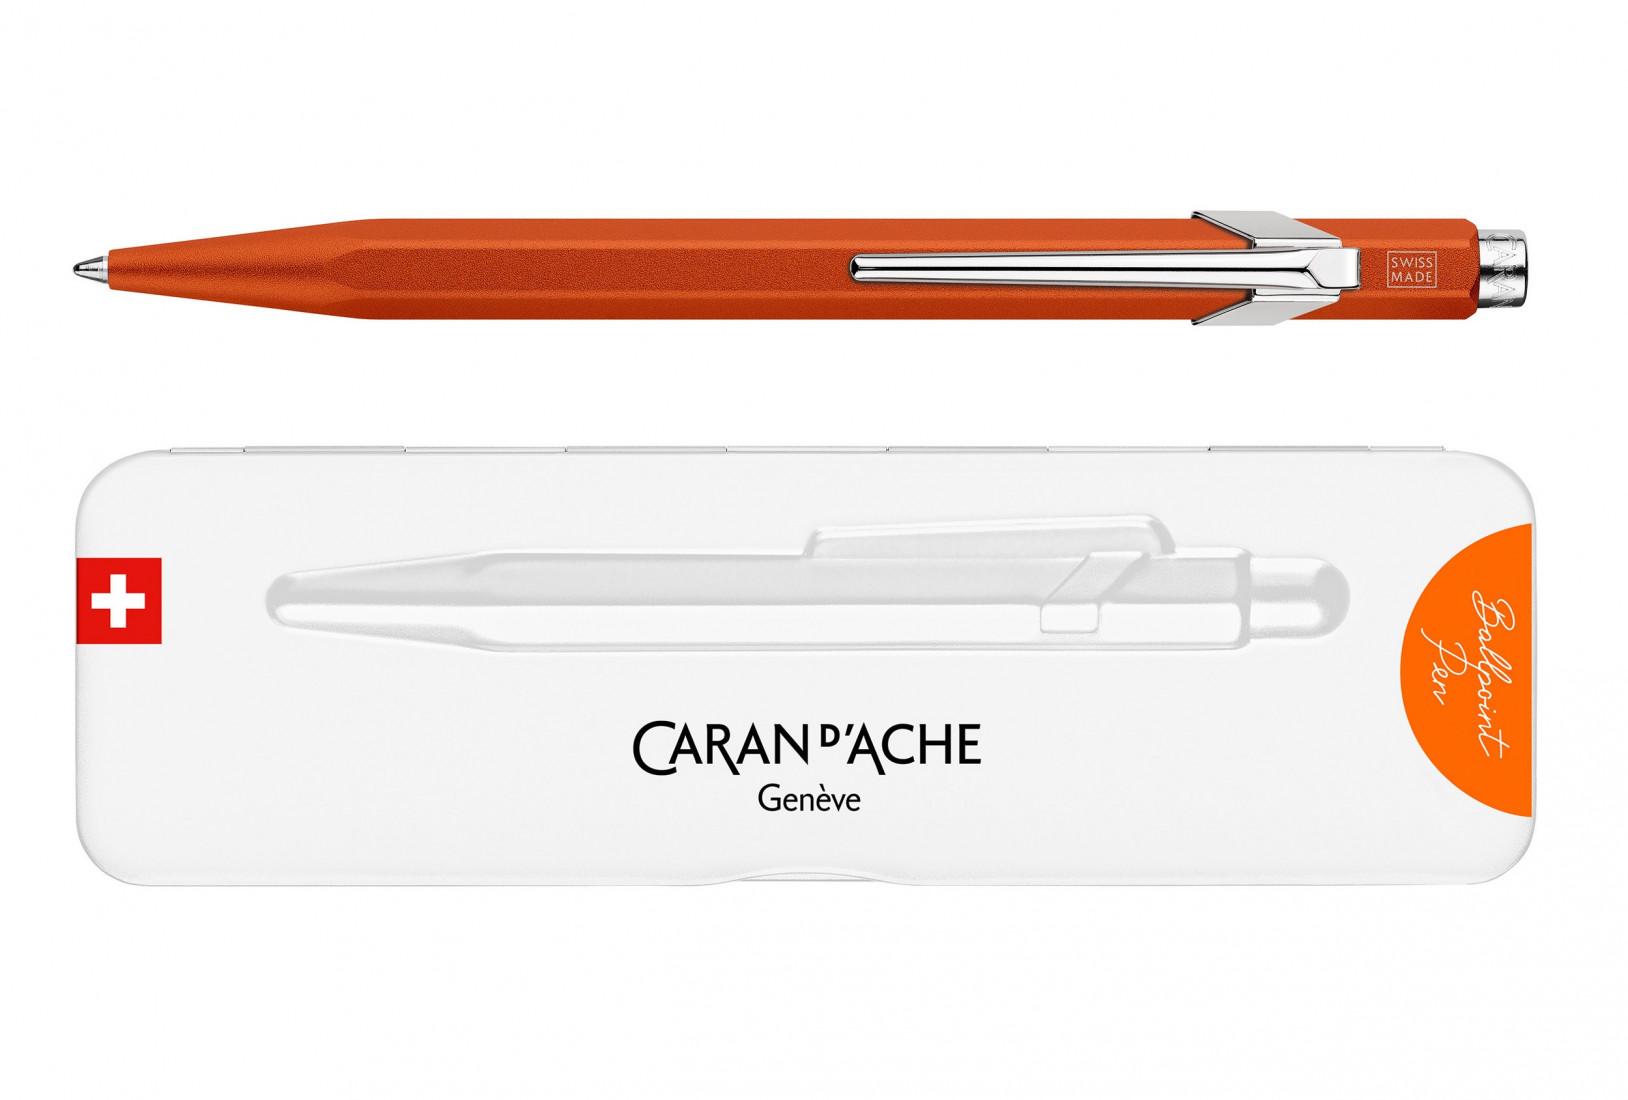 Caran Dache 849 metallic orange ballpoint pen, with slim metal box